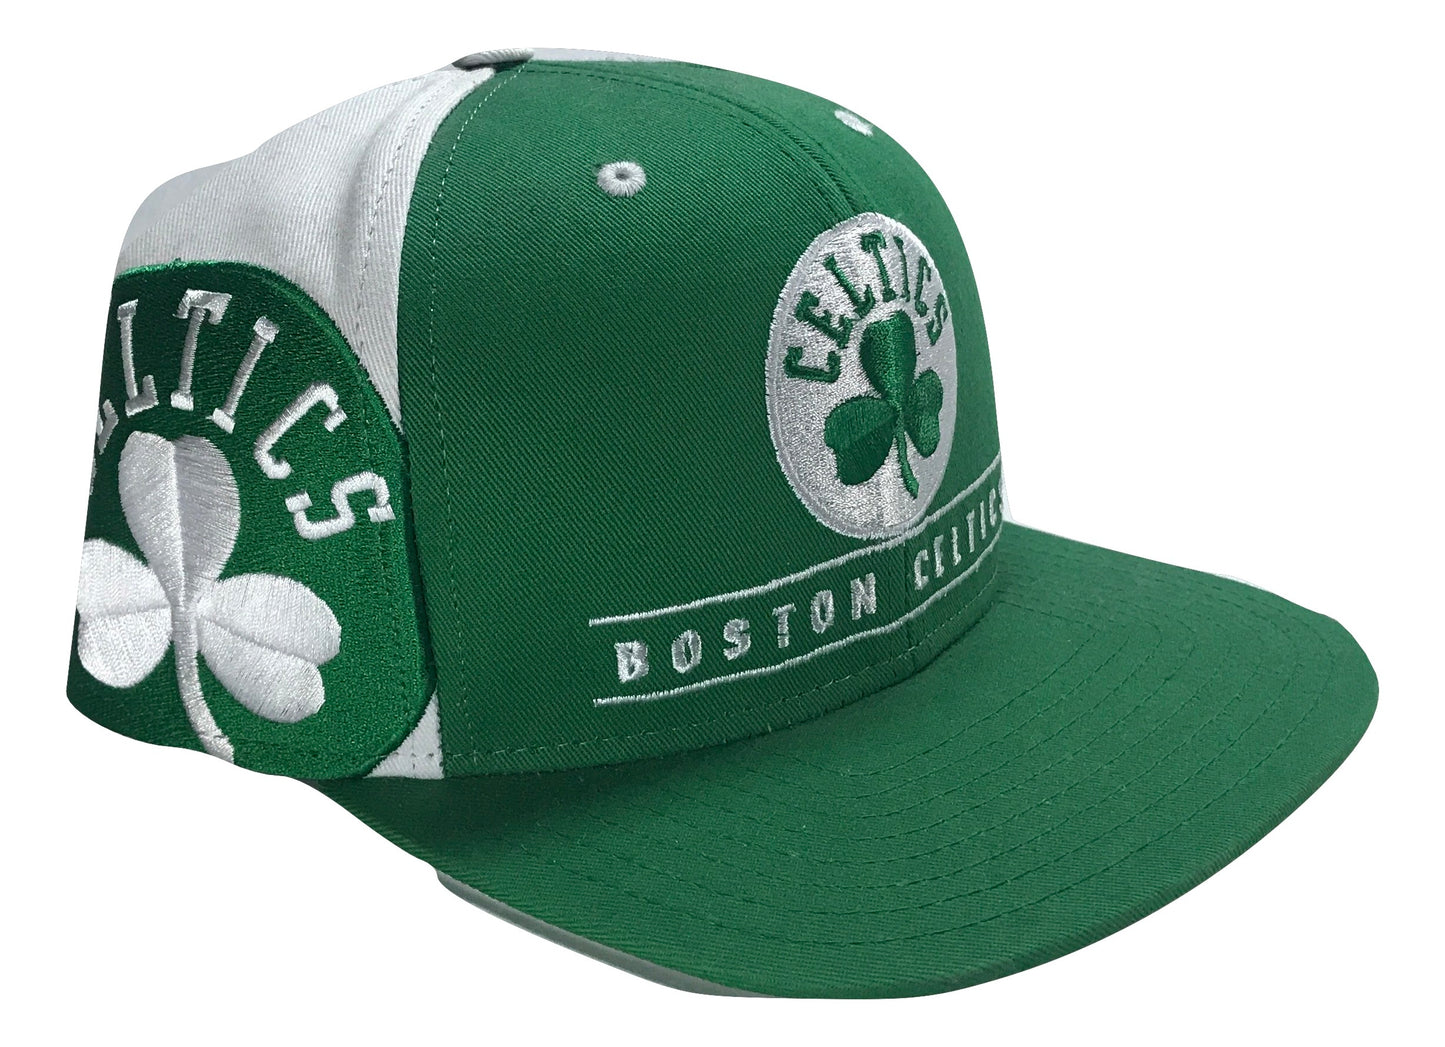 Boston Celtics (Green) Snapback